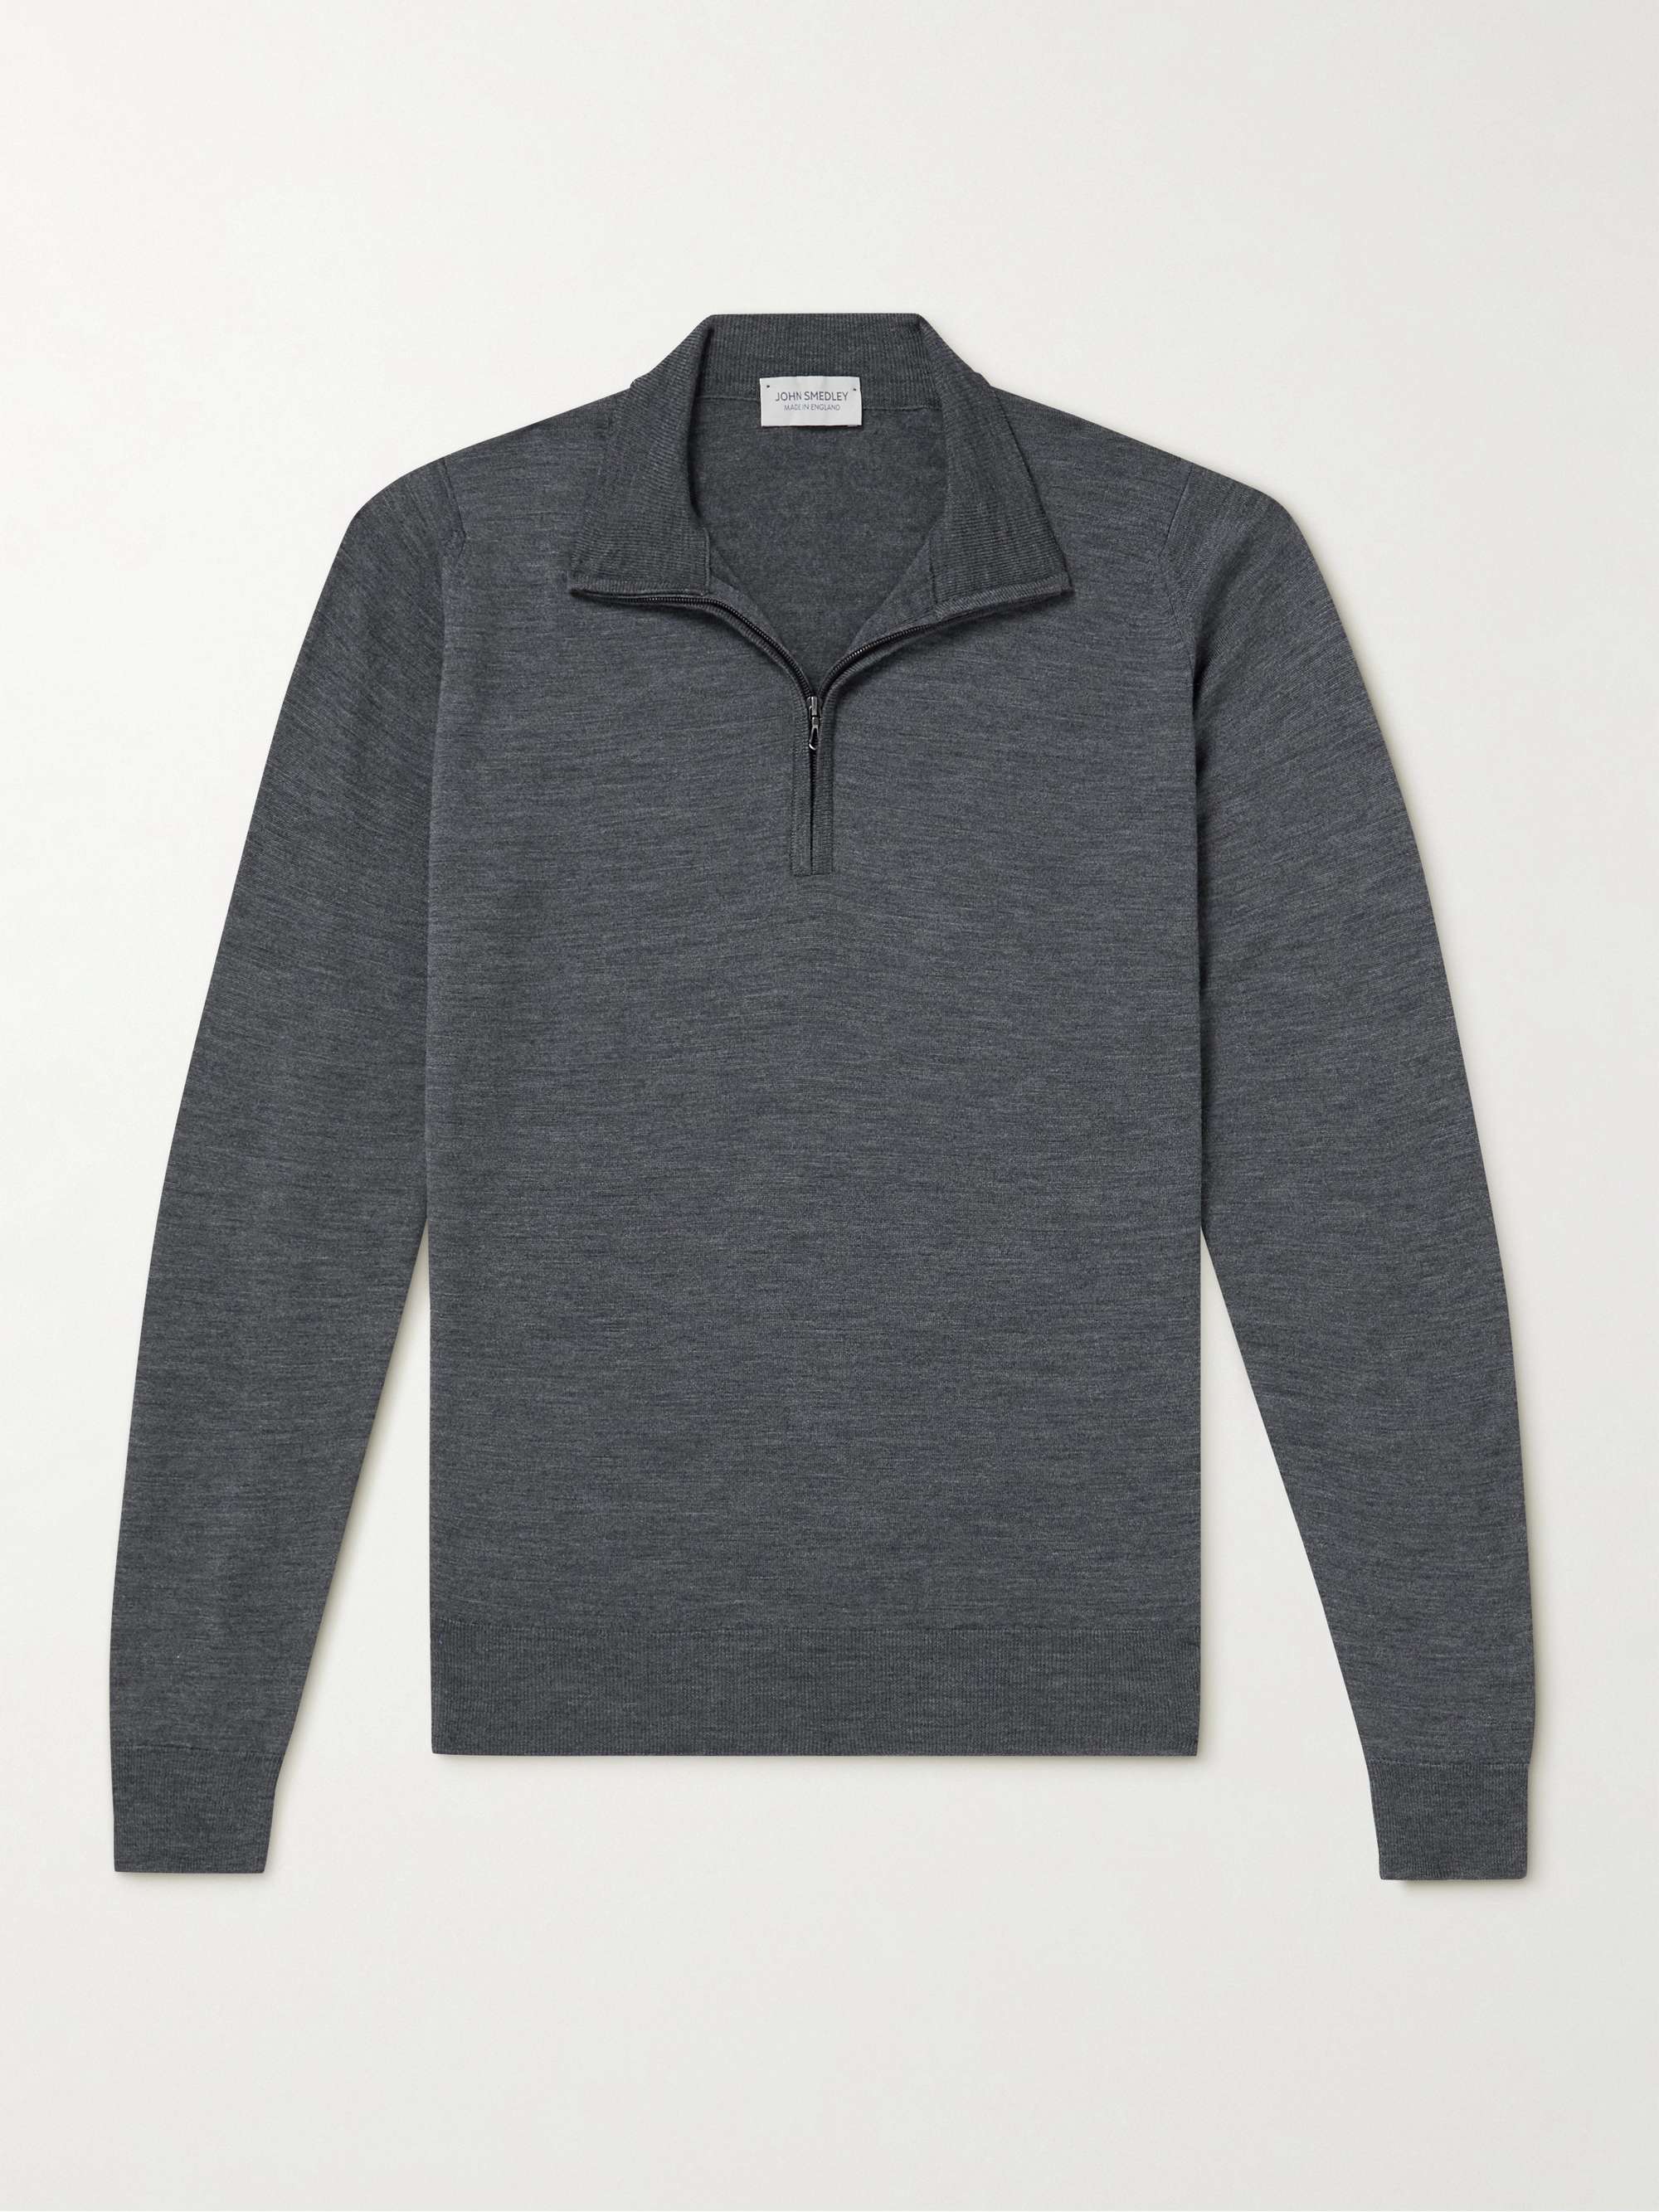 JOHN SMEDLEY Barrow Merino Wool Half-Zip Sweater for Men | MR PORTER